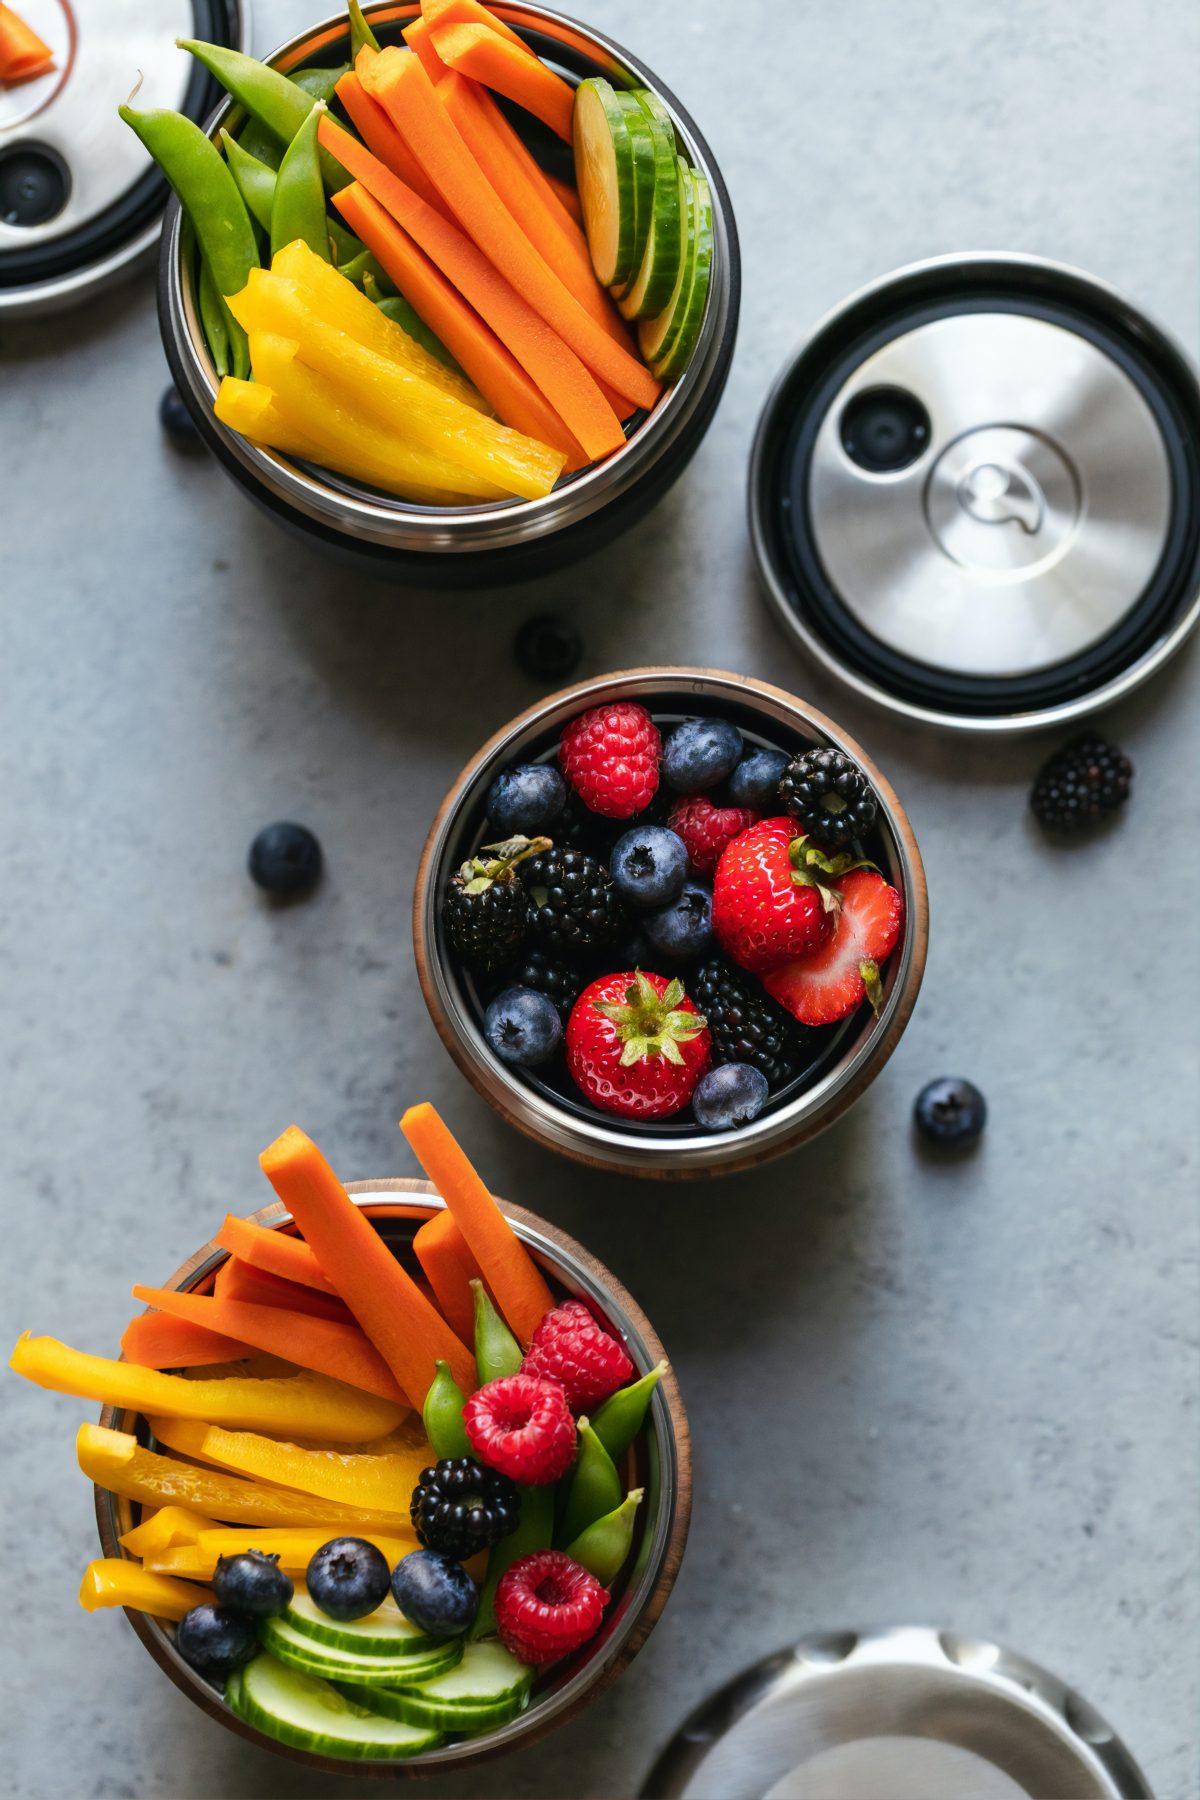 Healthy snacks in bowls